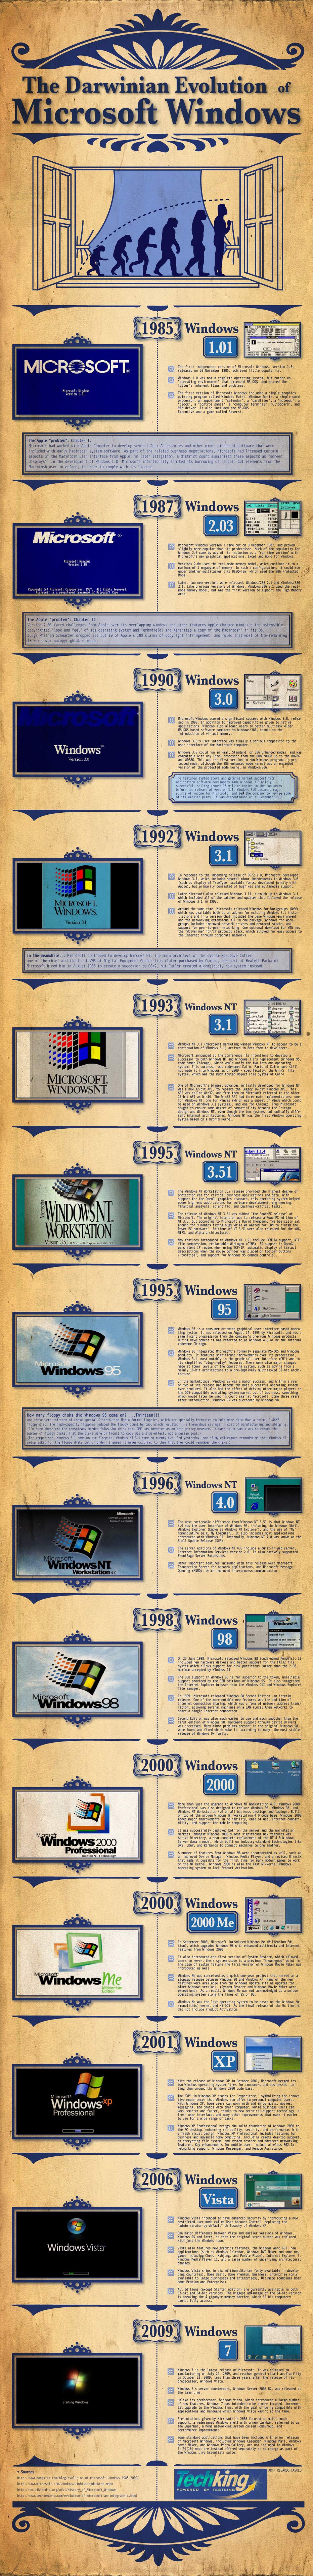 L'histoire de Windows